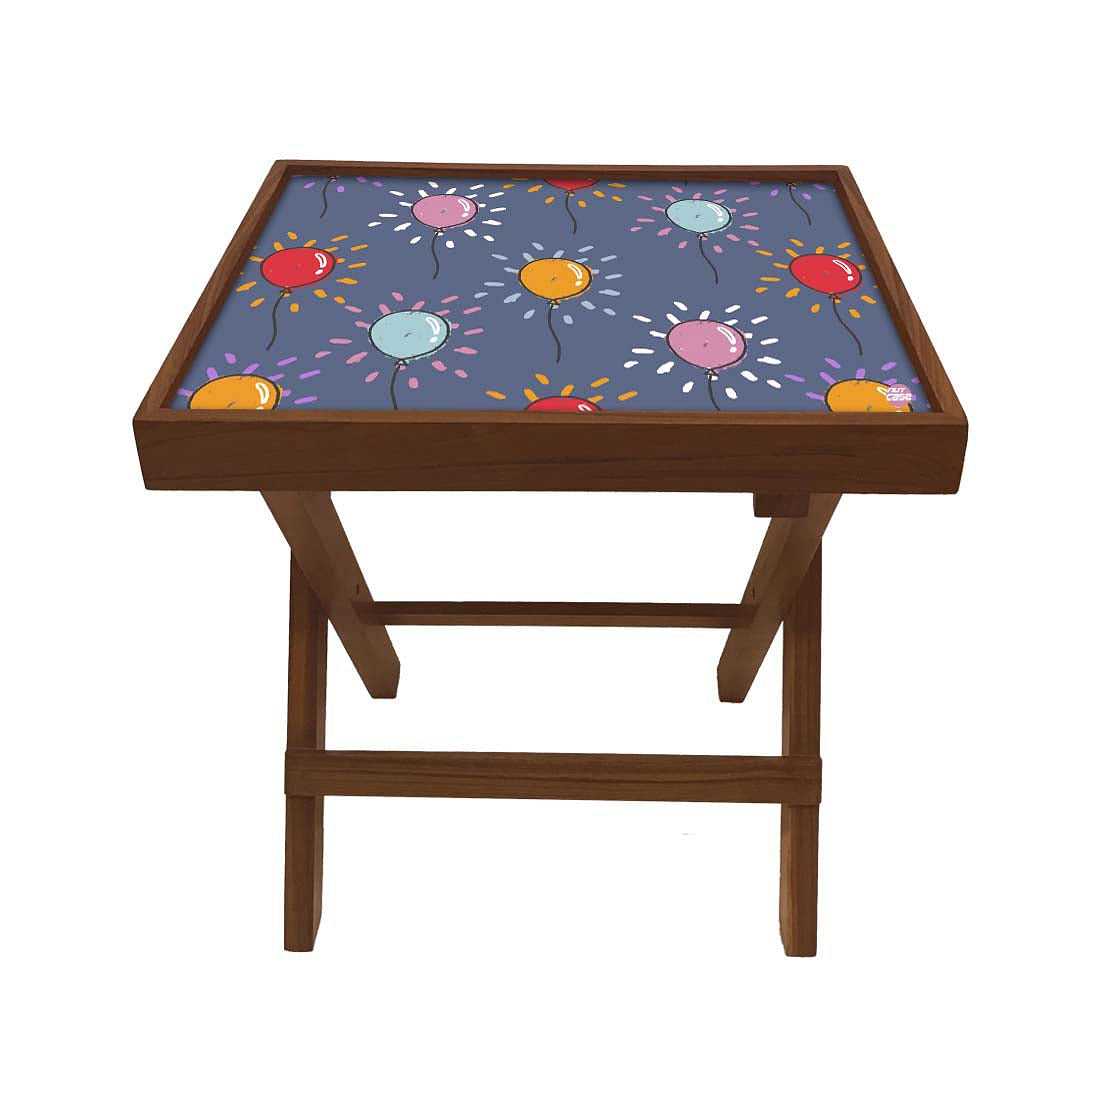 Folding Side Table for Living Room - Teak Wood -Cute Bullone Nutcase